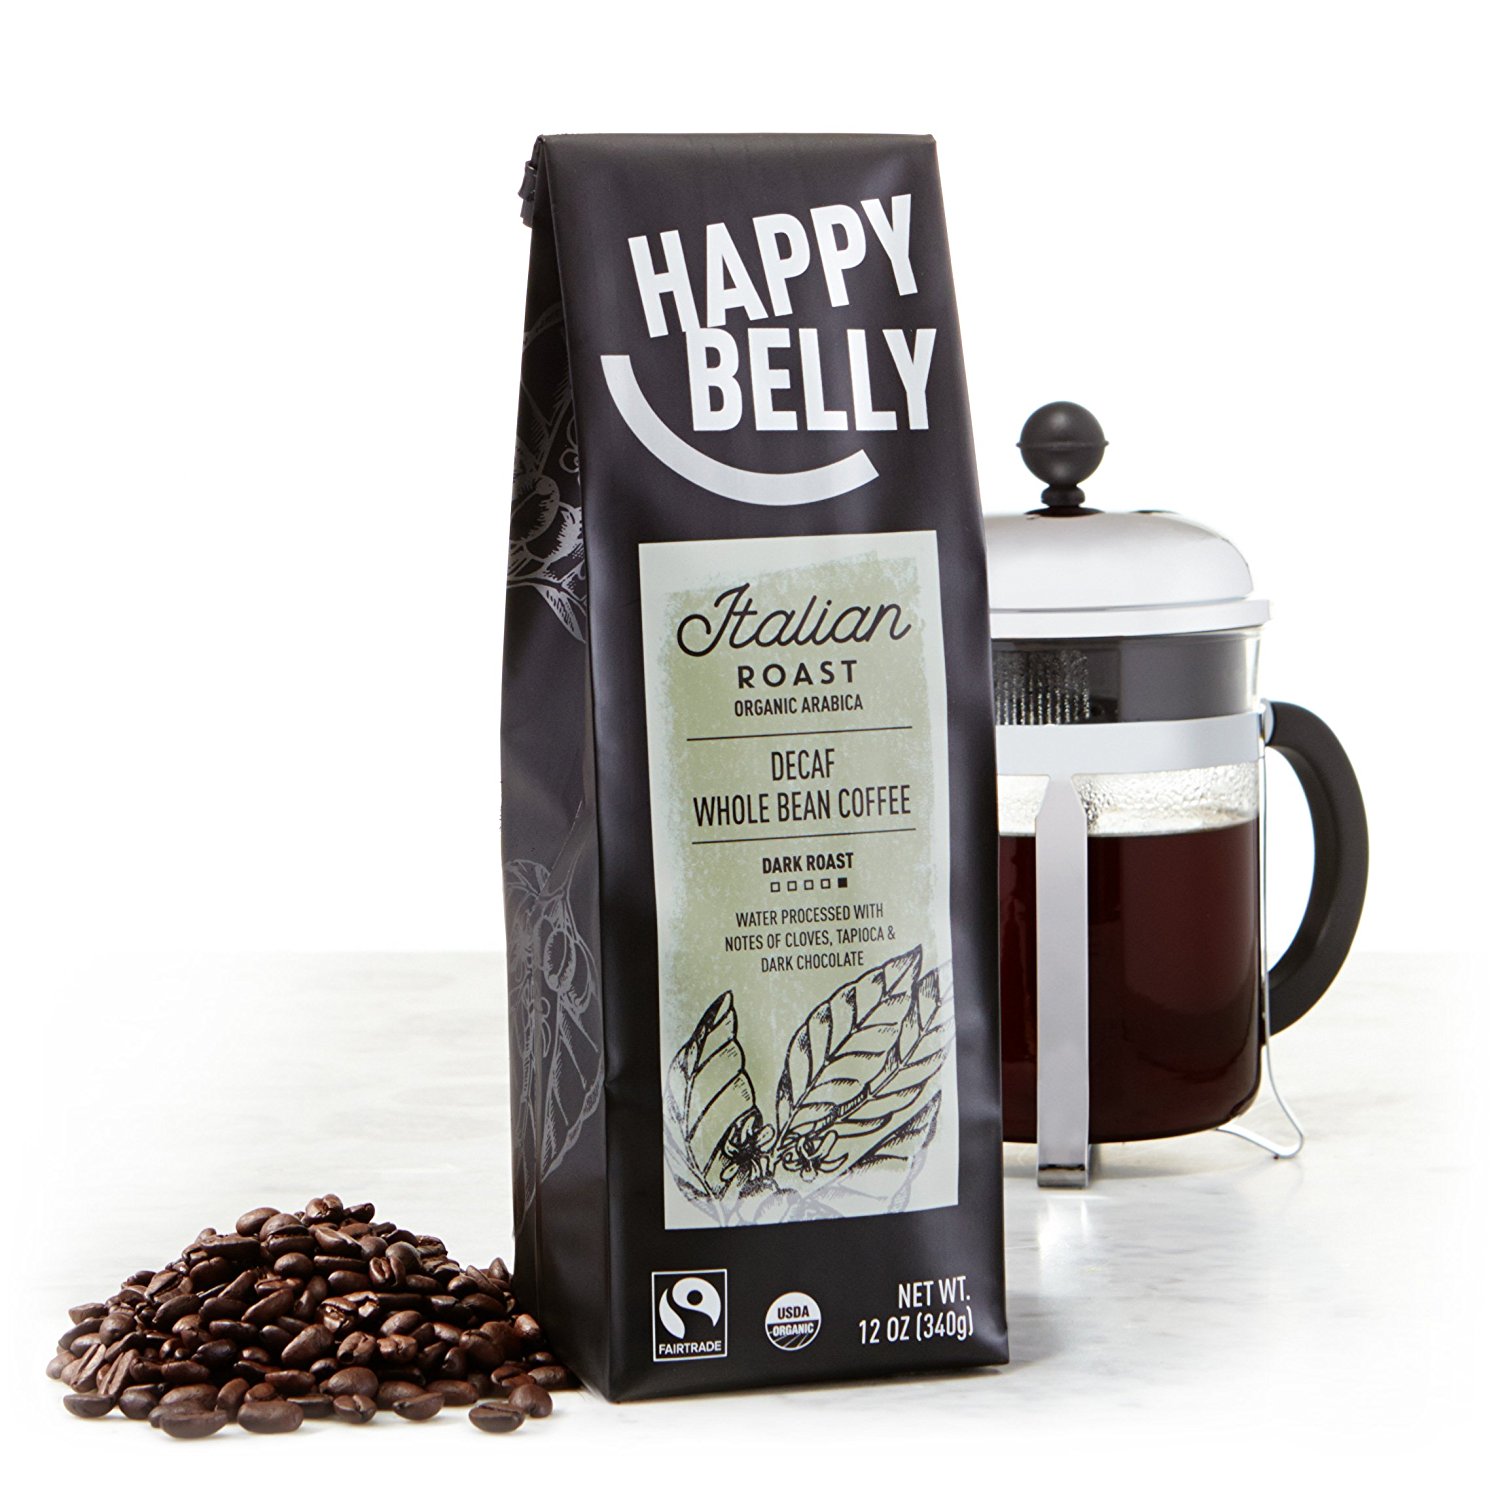 Happy Belly Italian Roast Decaf Organic Fairtrade Coffee – Just $6.00!